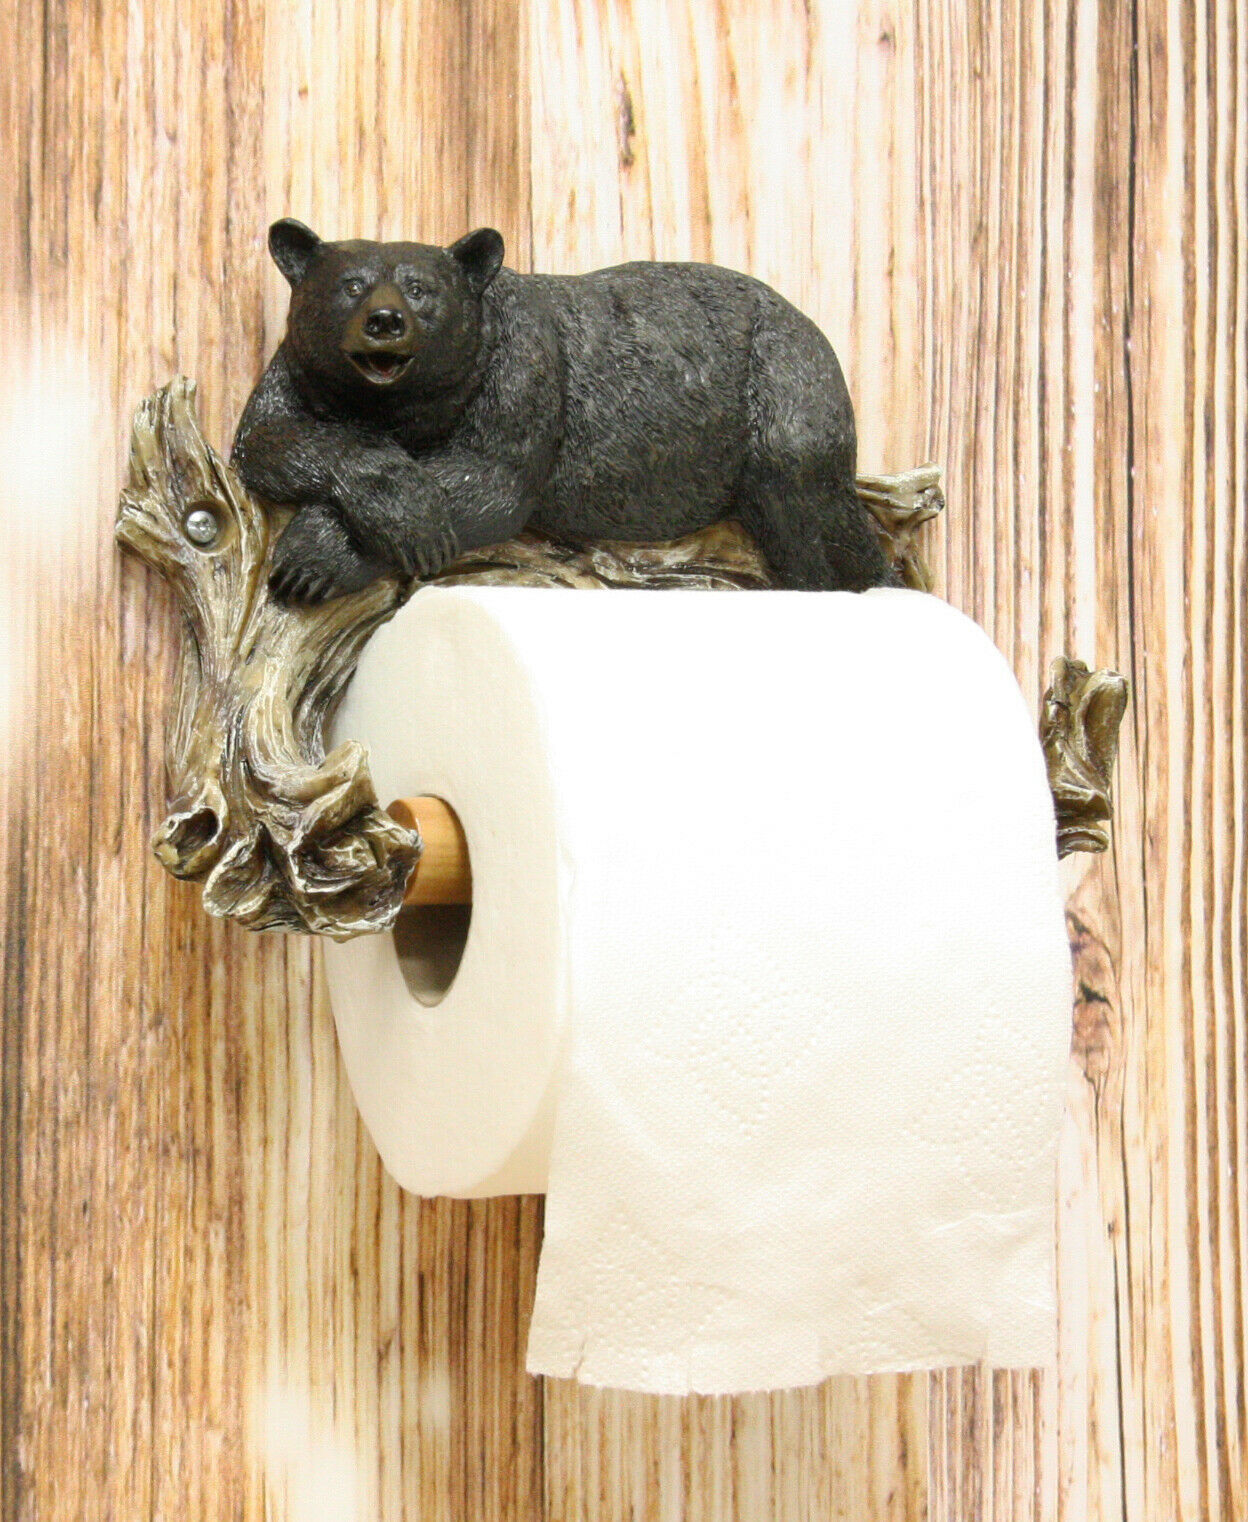 Rustic Lazy Black Bear Resting On Tree Branch Toilet Paper Holder Figurine 8L